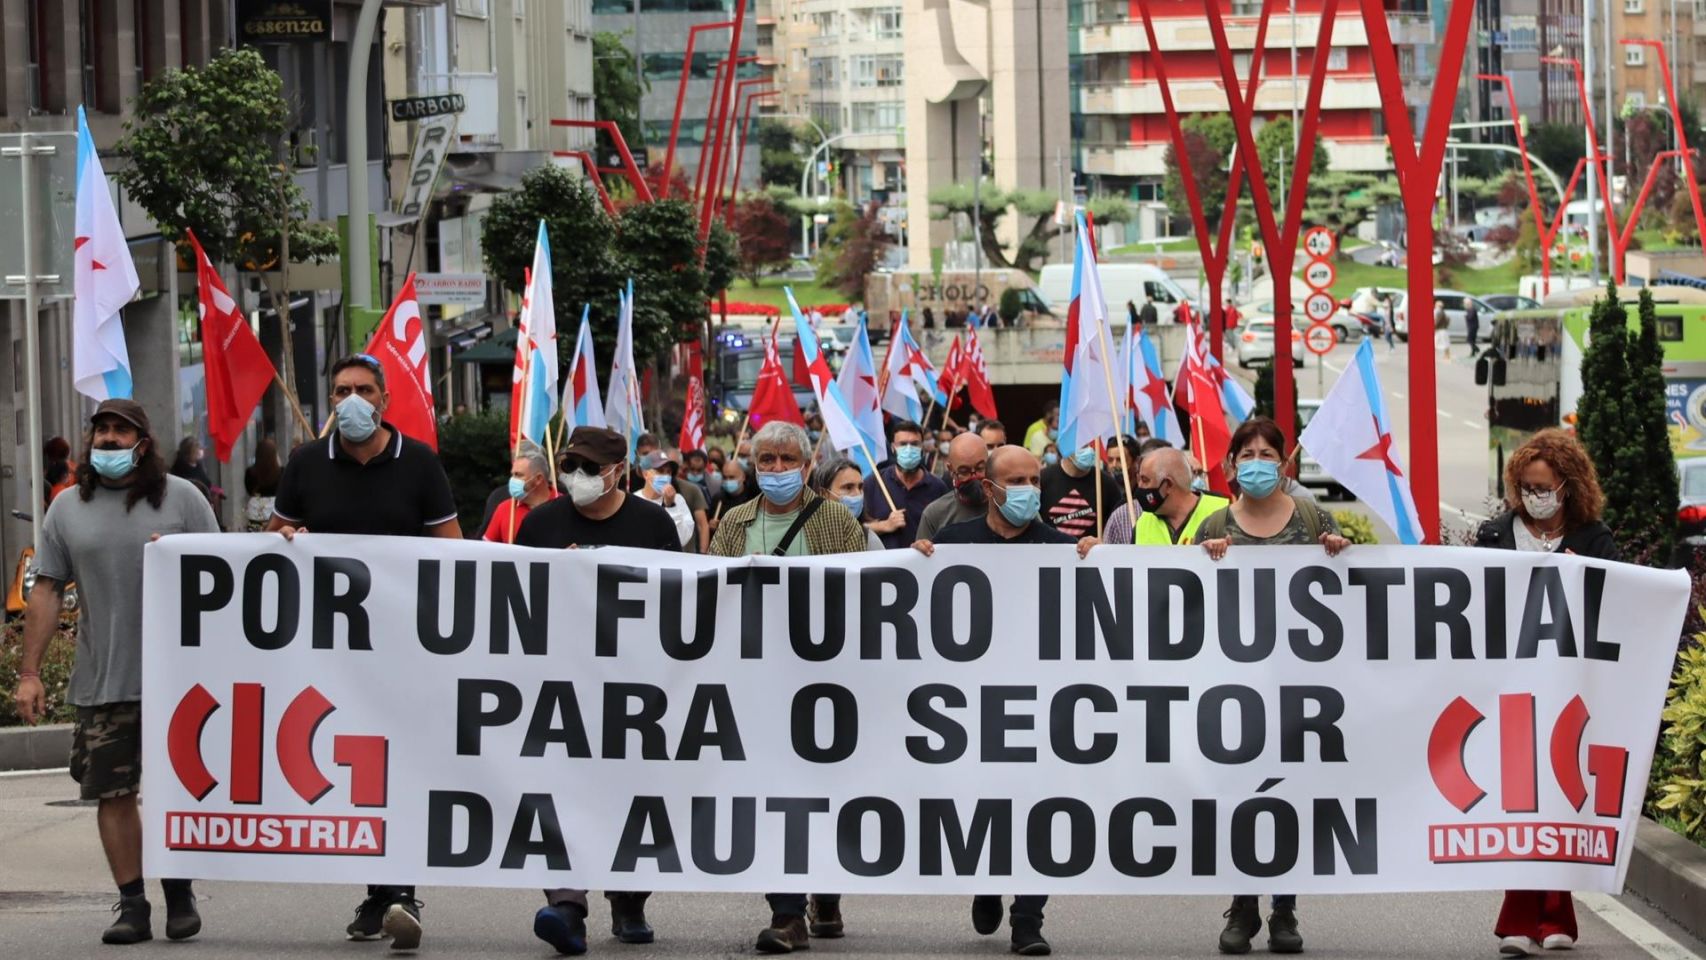 Manifestantes recorren las calles de Vigo